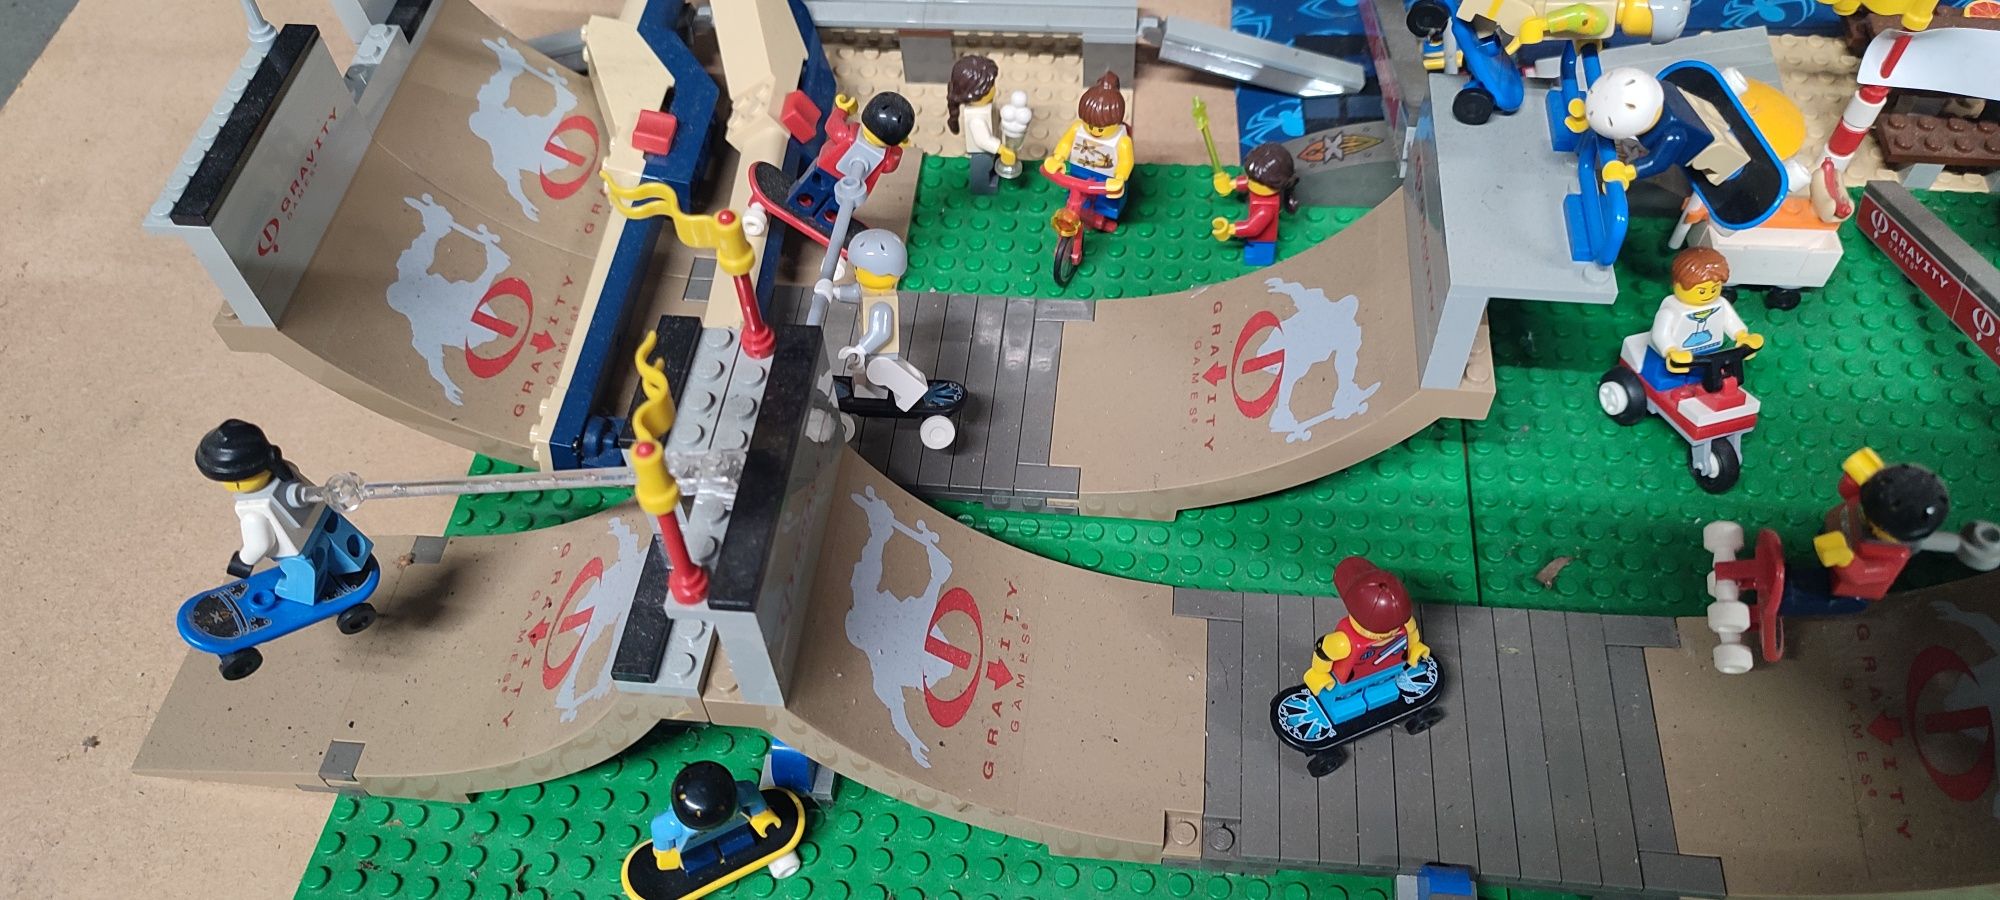 LEGO skate park 3535,3537